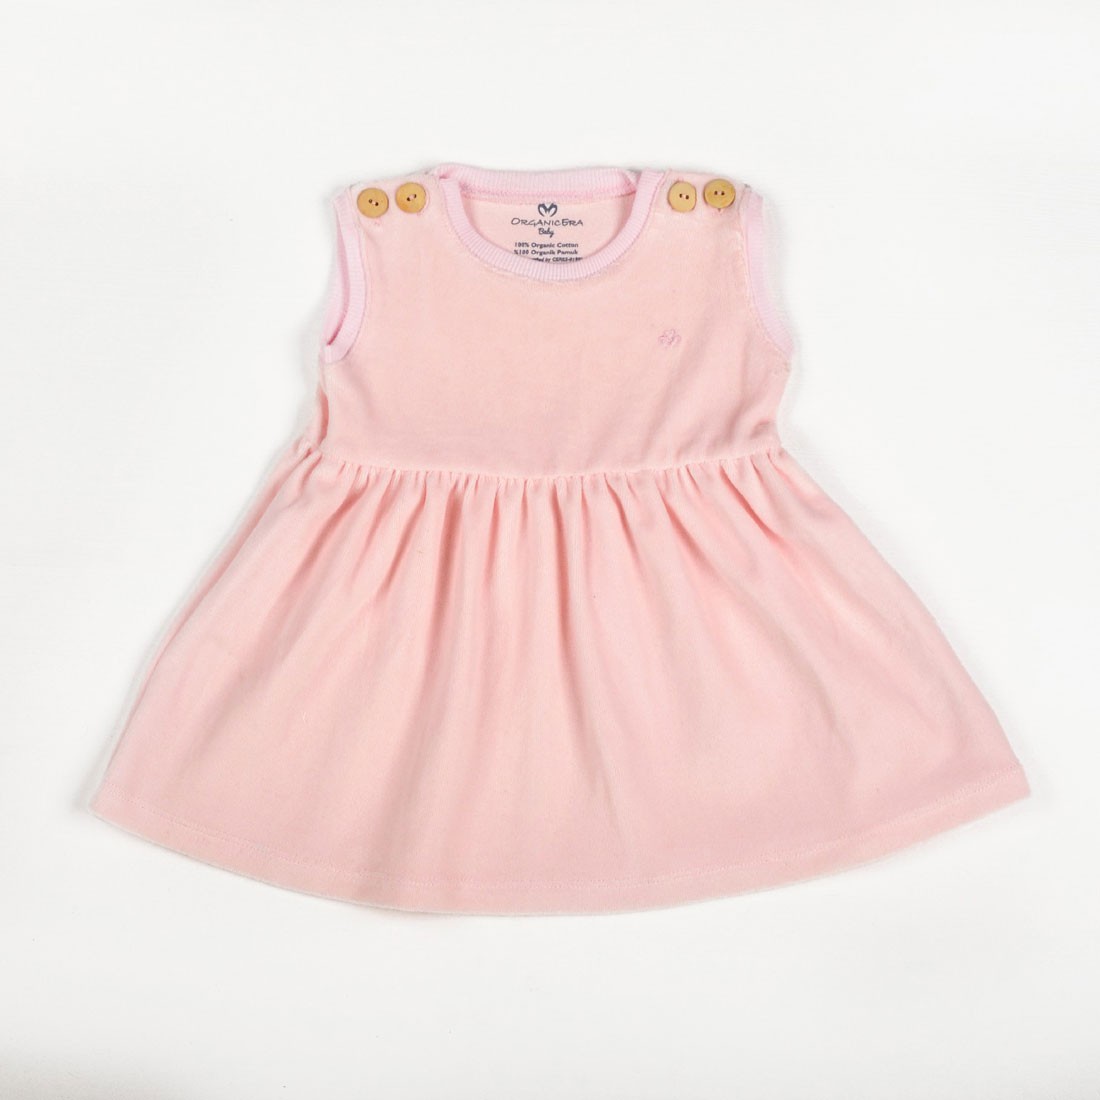 OrganicEra Organic Nicky Dress, Pink